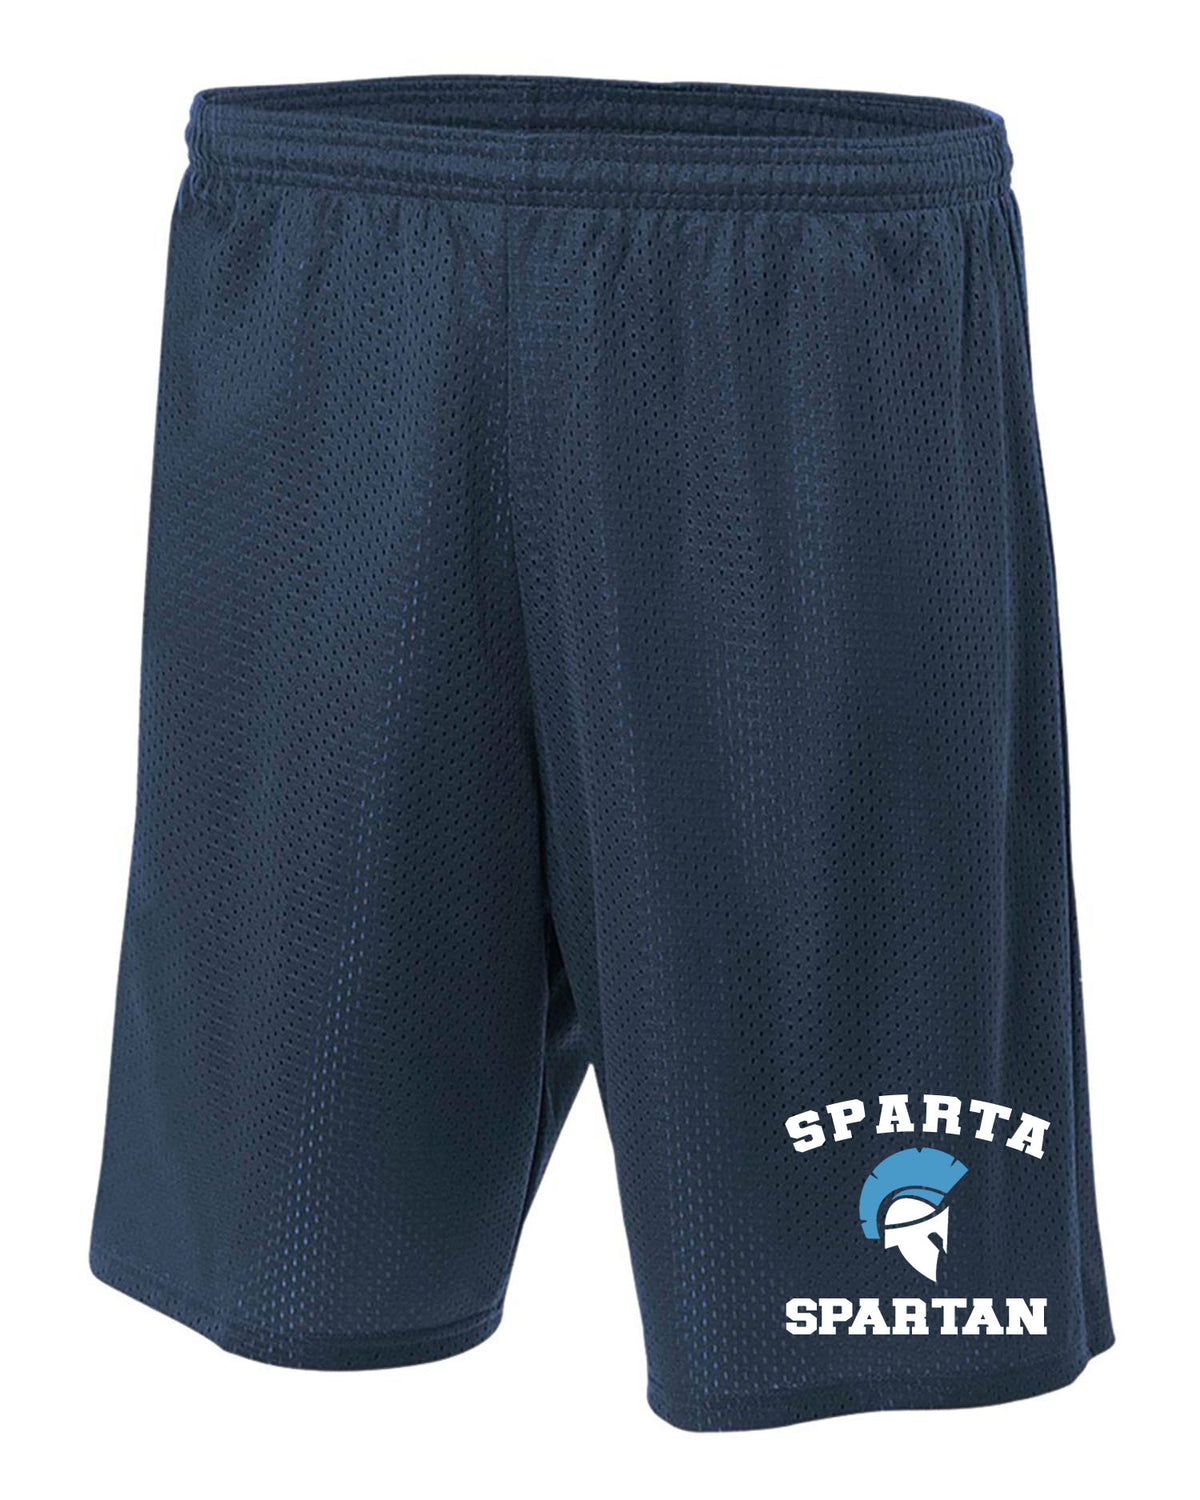 Sparta School Design 1 Mesh Shorts